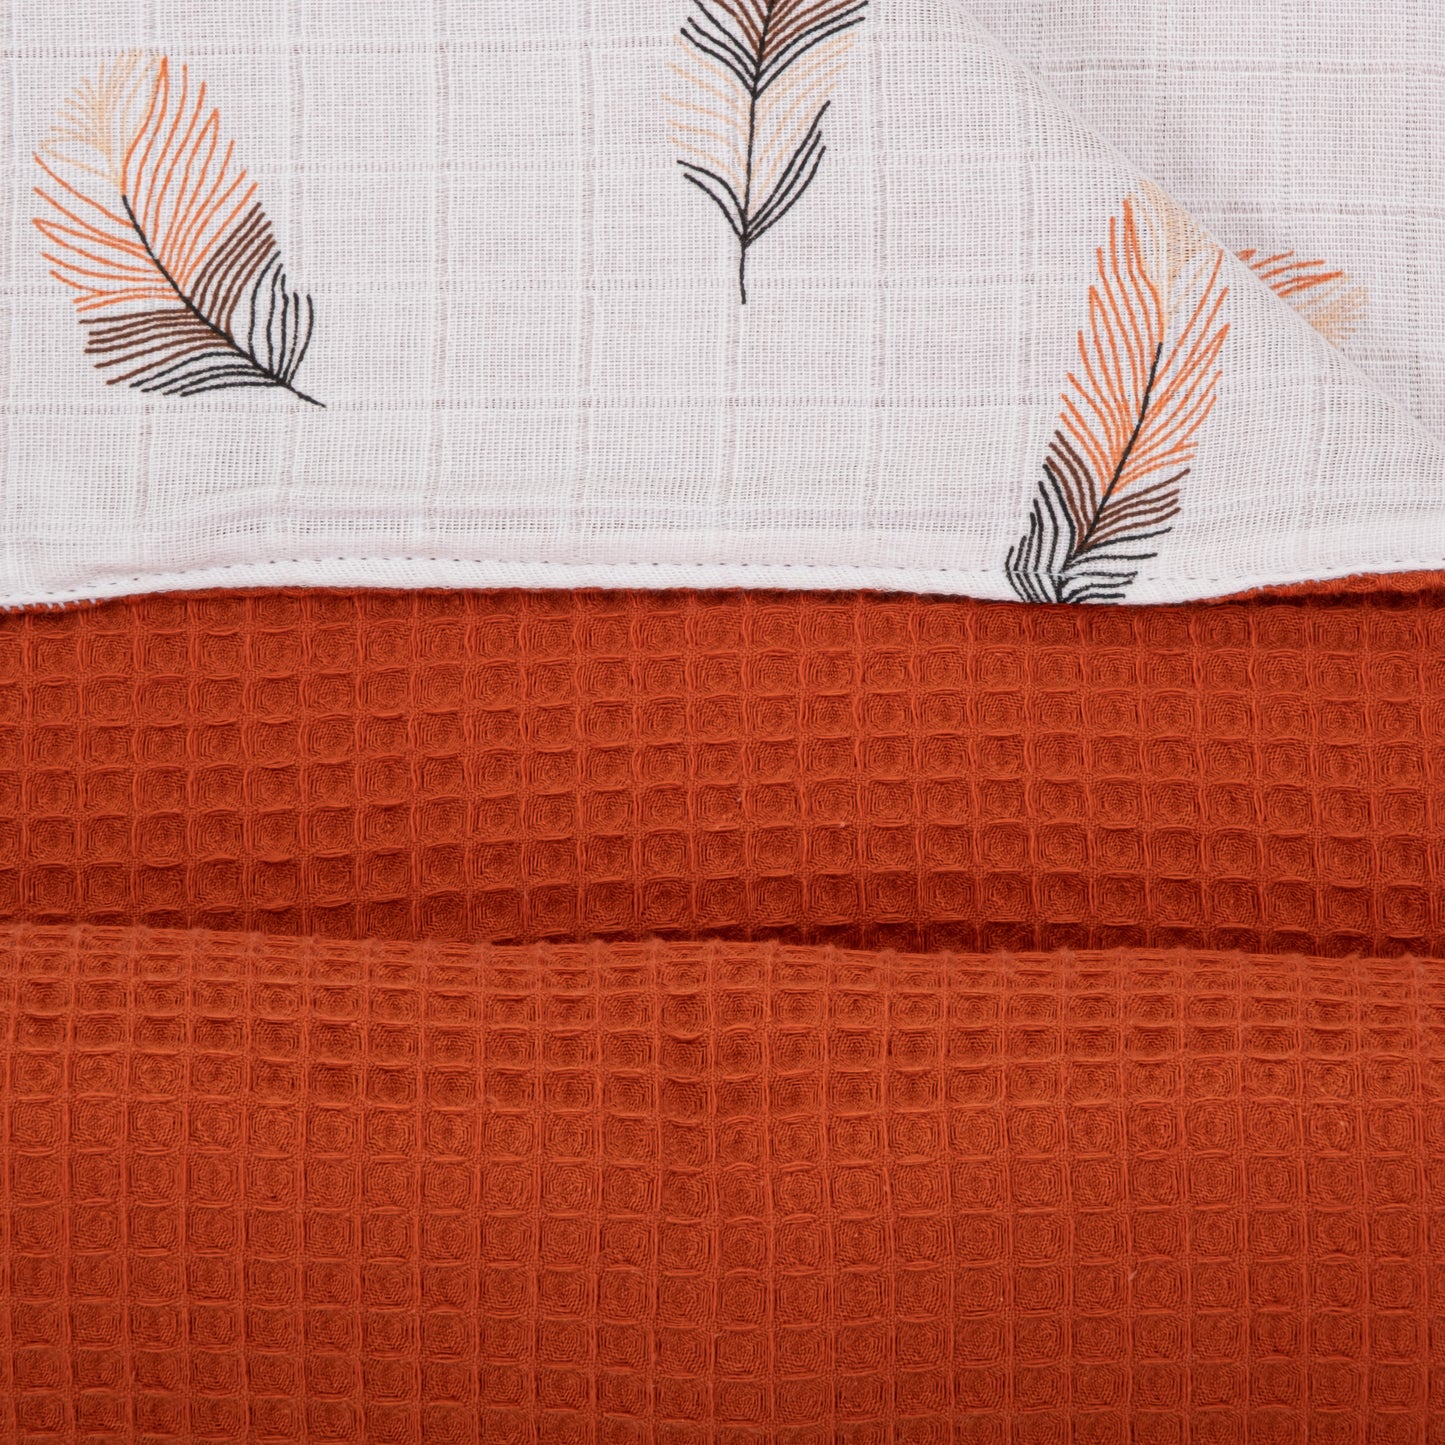 Pique Blanket - Double Side - Tile Honeycomb - Orange Feather